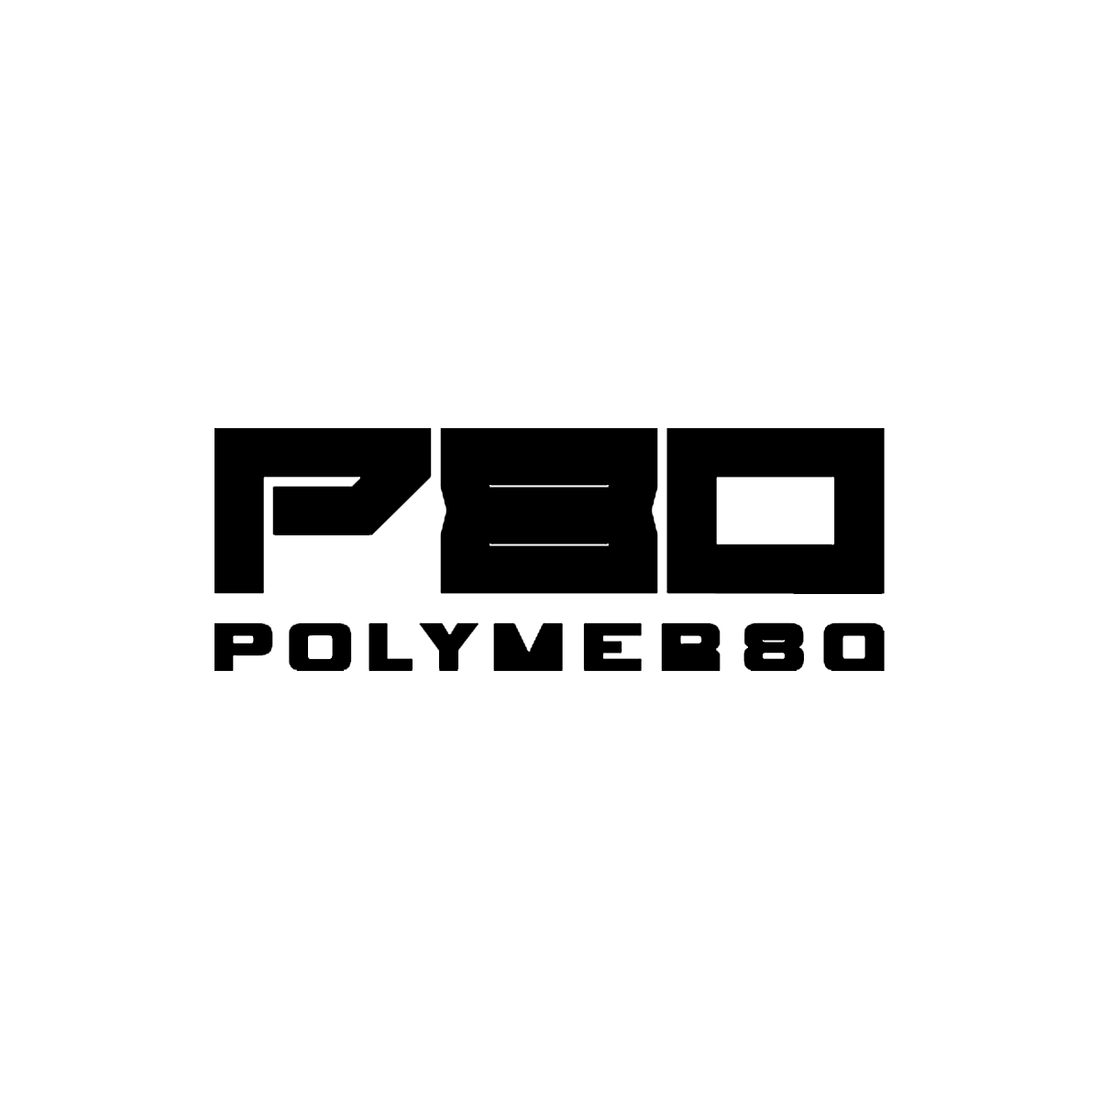 Polymer 80 IWB Holsters